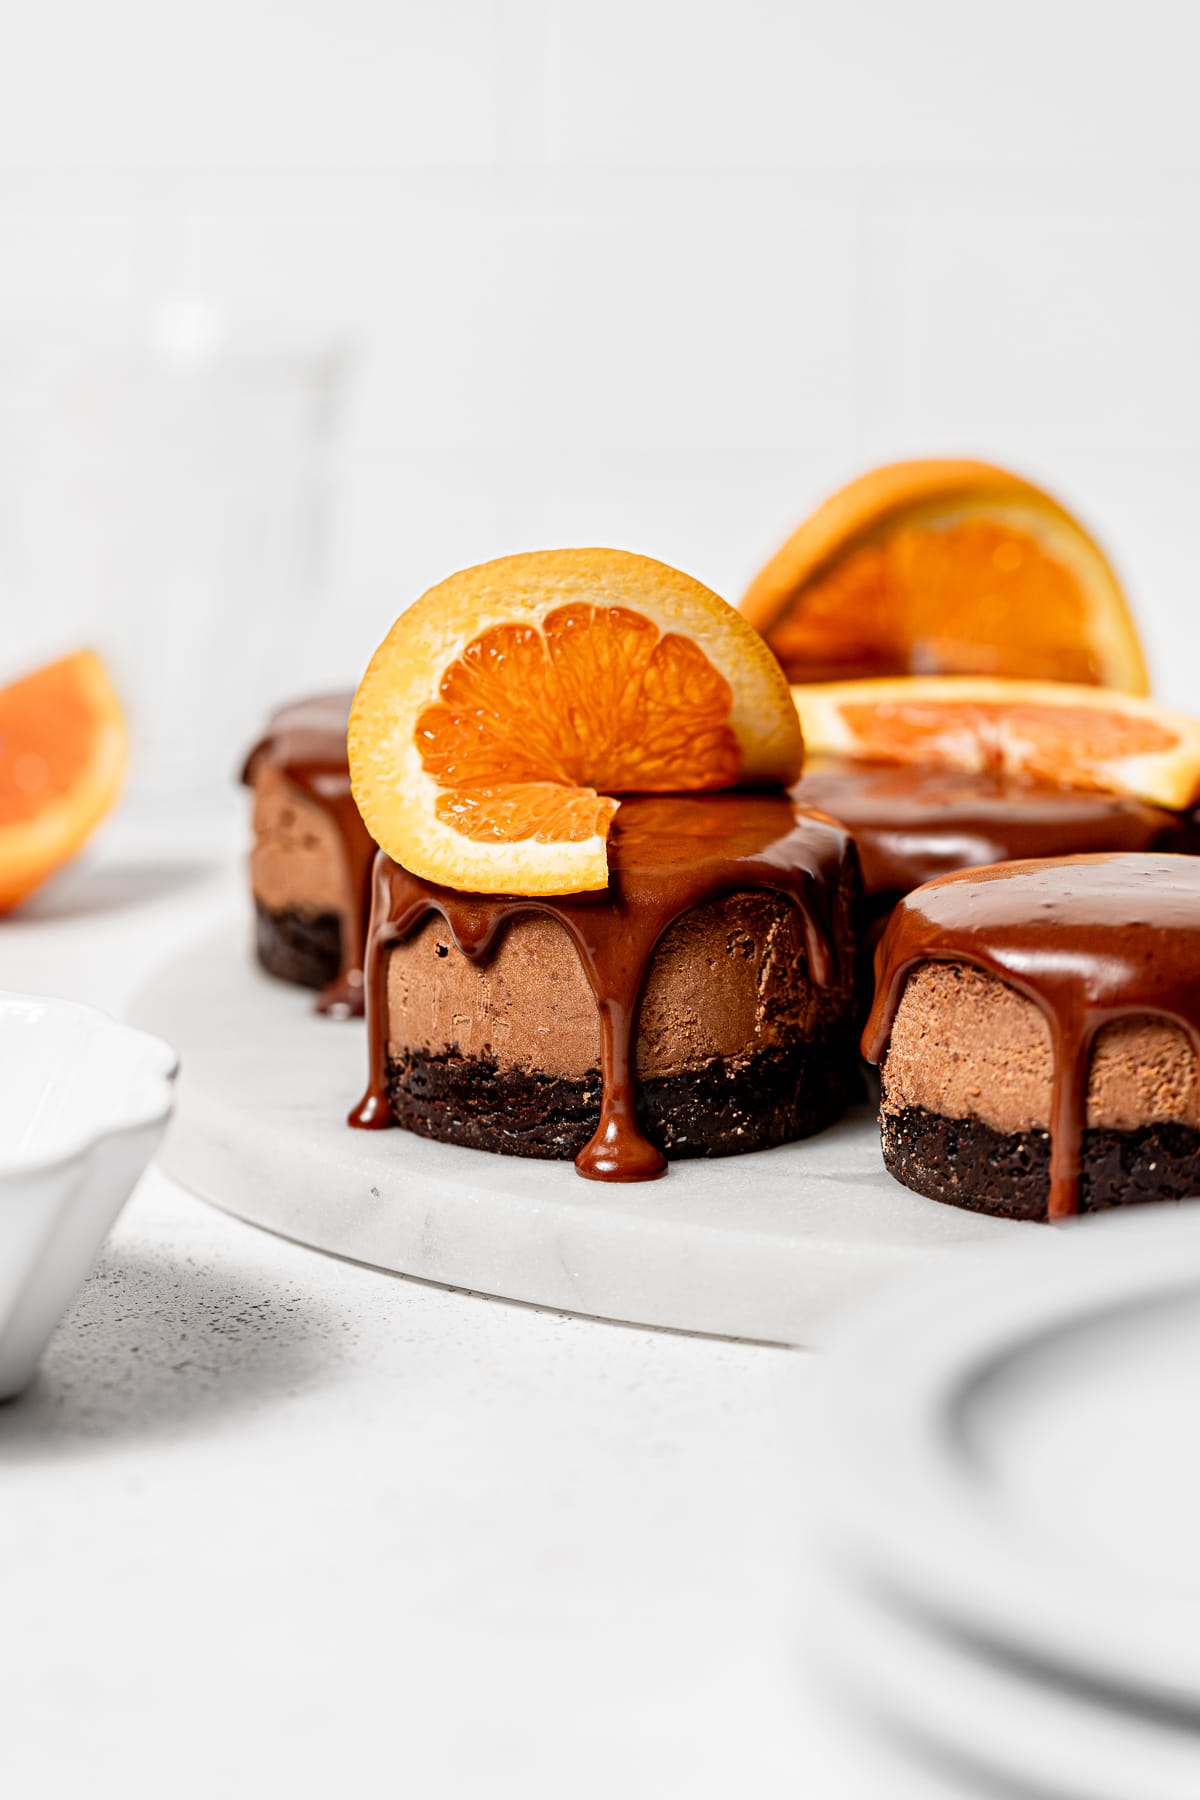 mini chocolate orange cheesecakes with orange slices on marble slab.